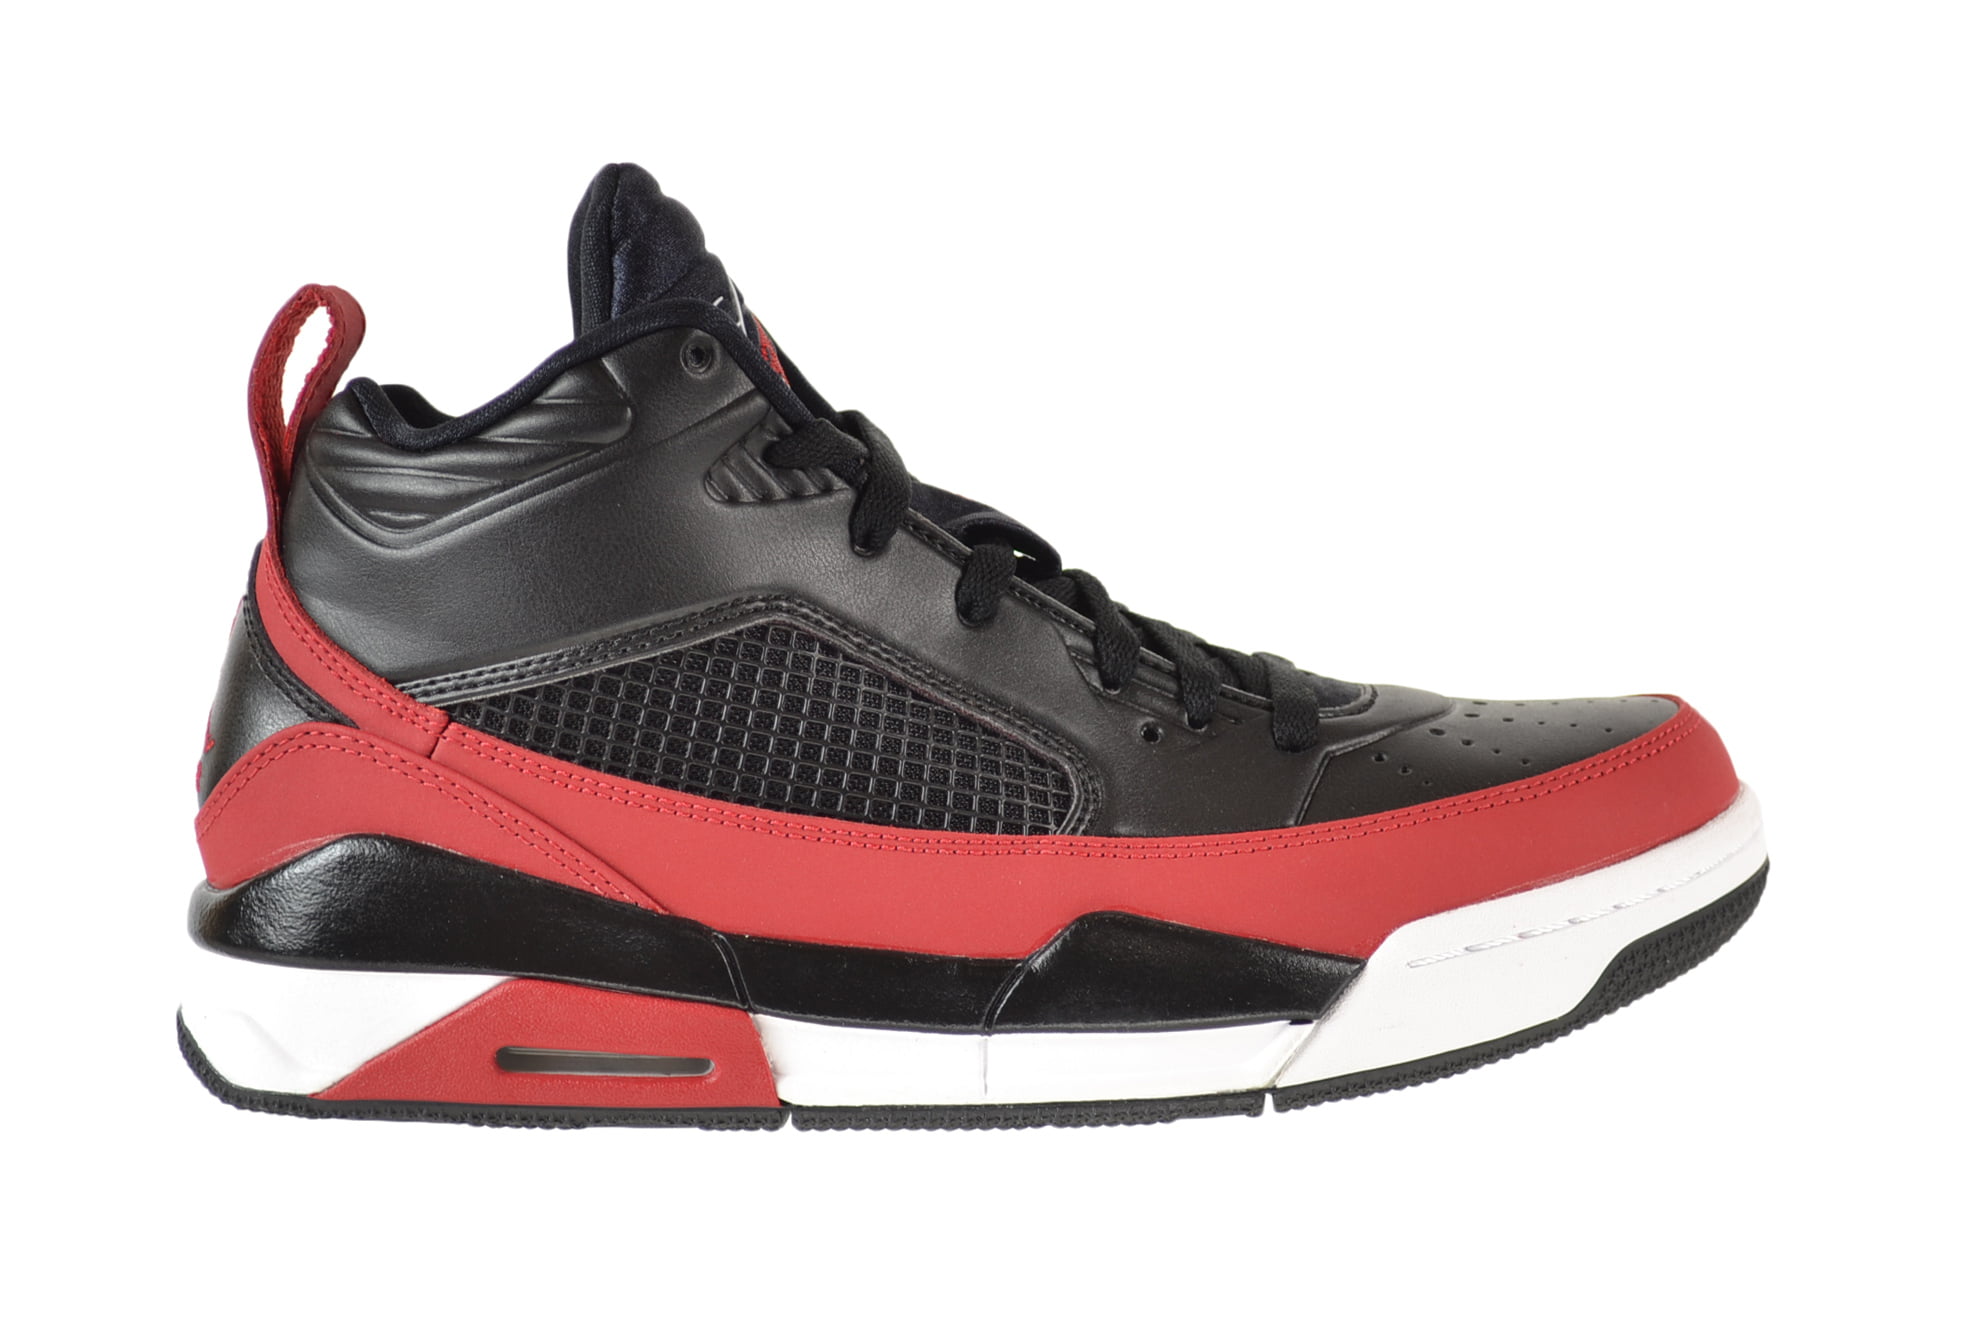 Jordan Flight 9.5 Men's Shoes Black/Gym Red/White 654262-002 - Walmart.com